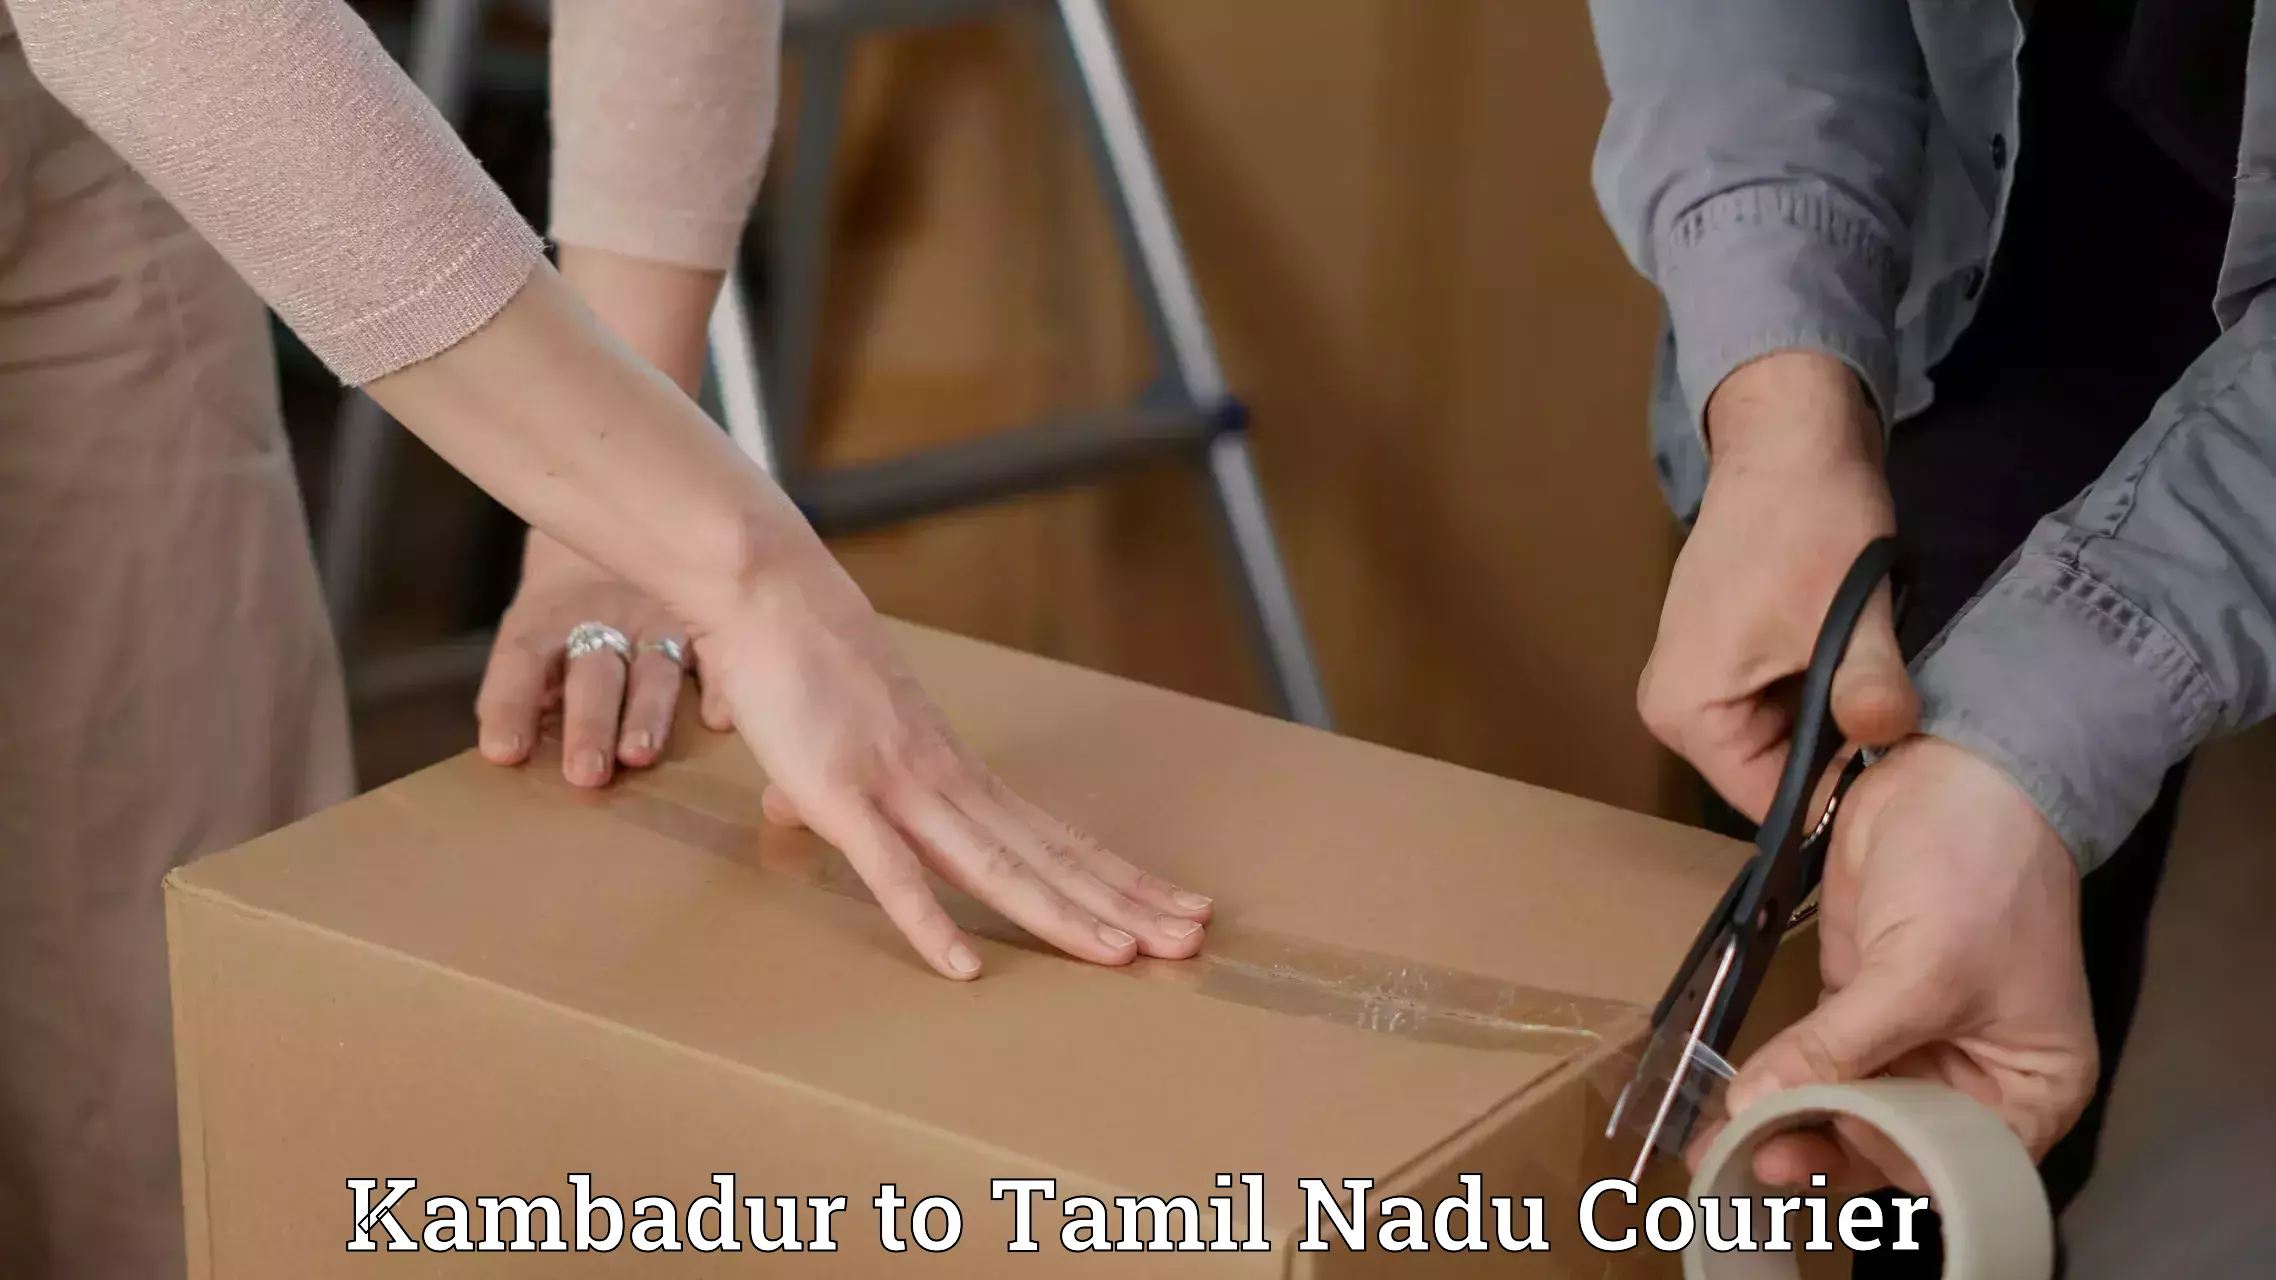 Tracking updates in Kambadur to Tamil Nadu